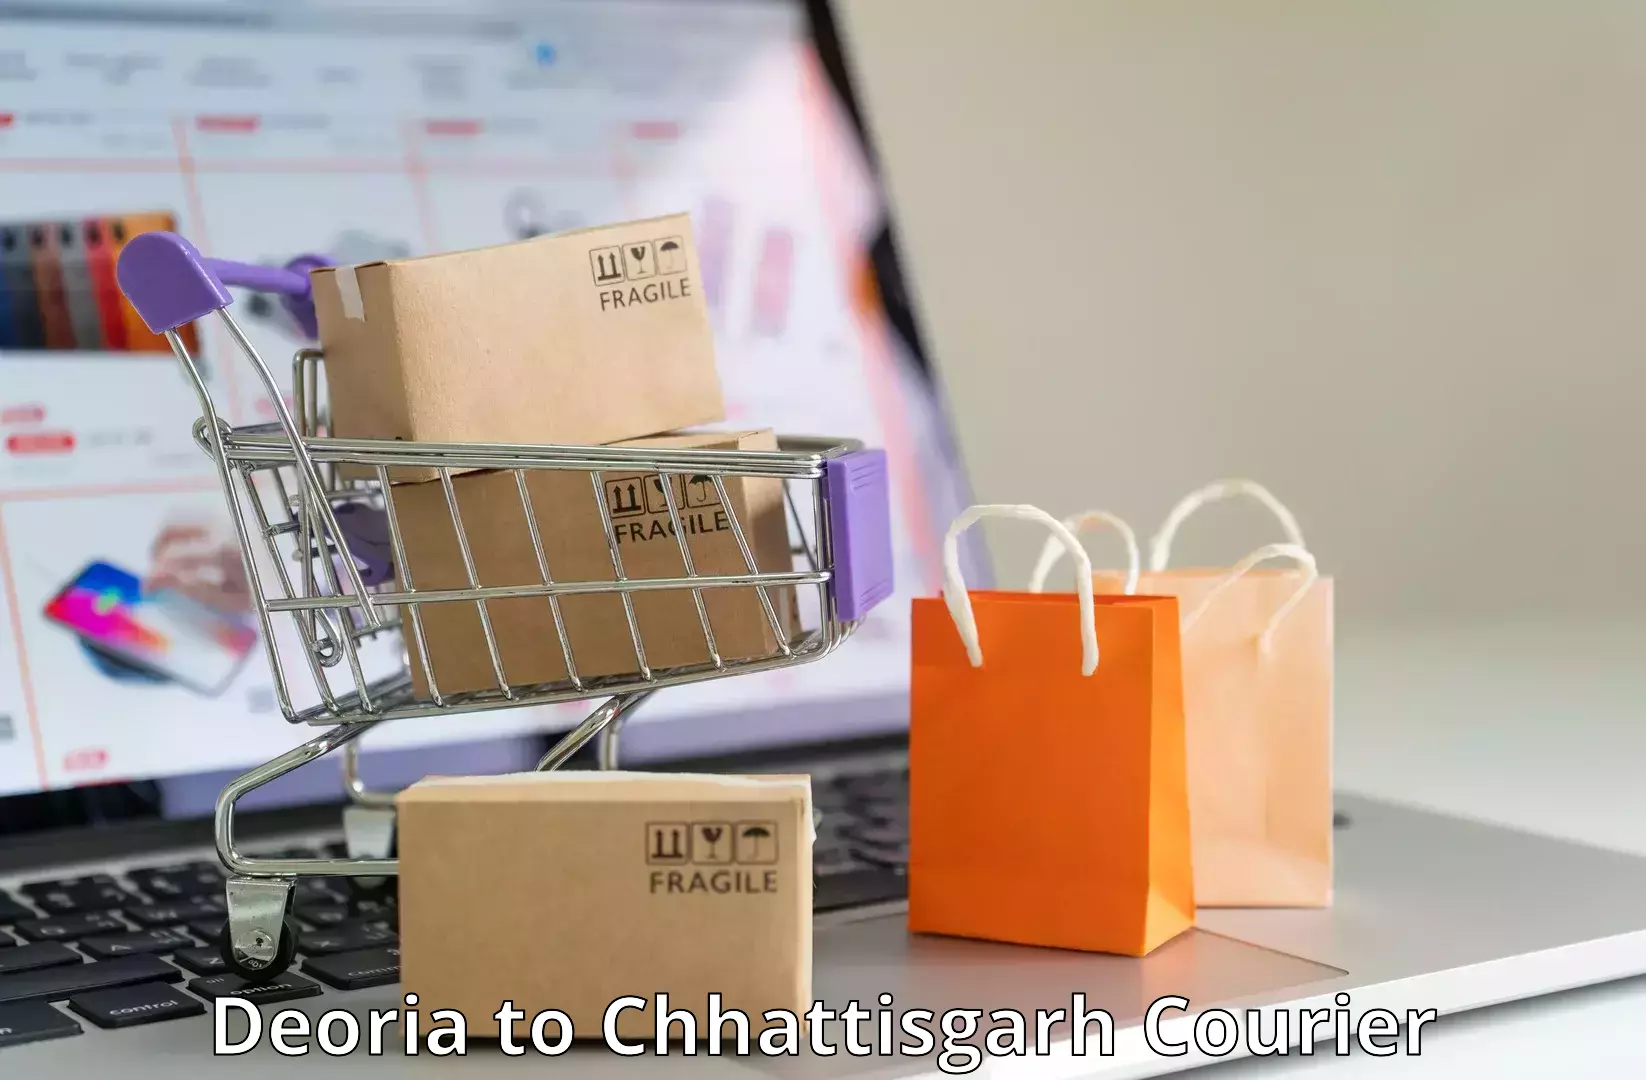 Efficient cargo handling Deoria to Patna Chhattisgarh